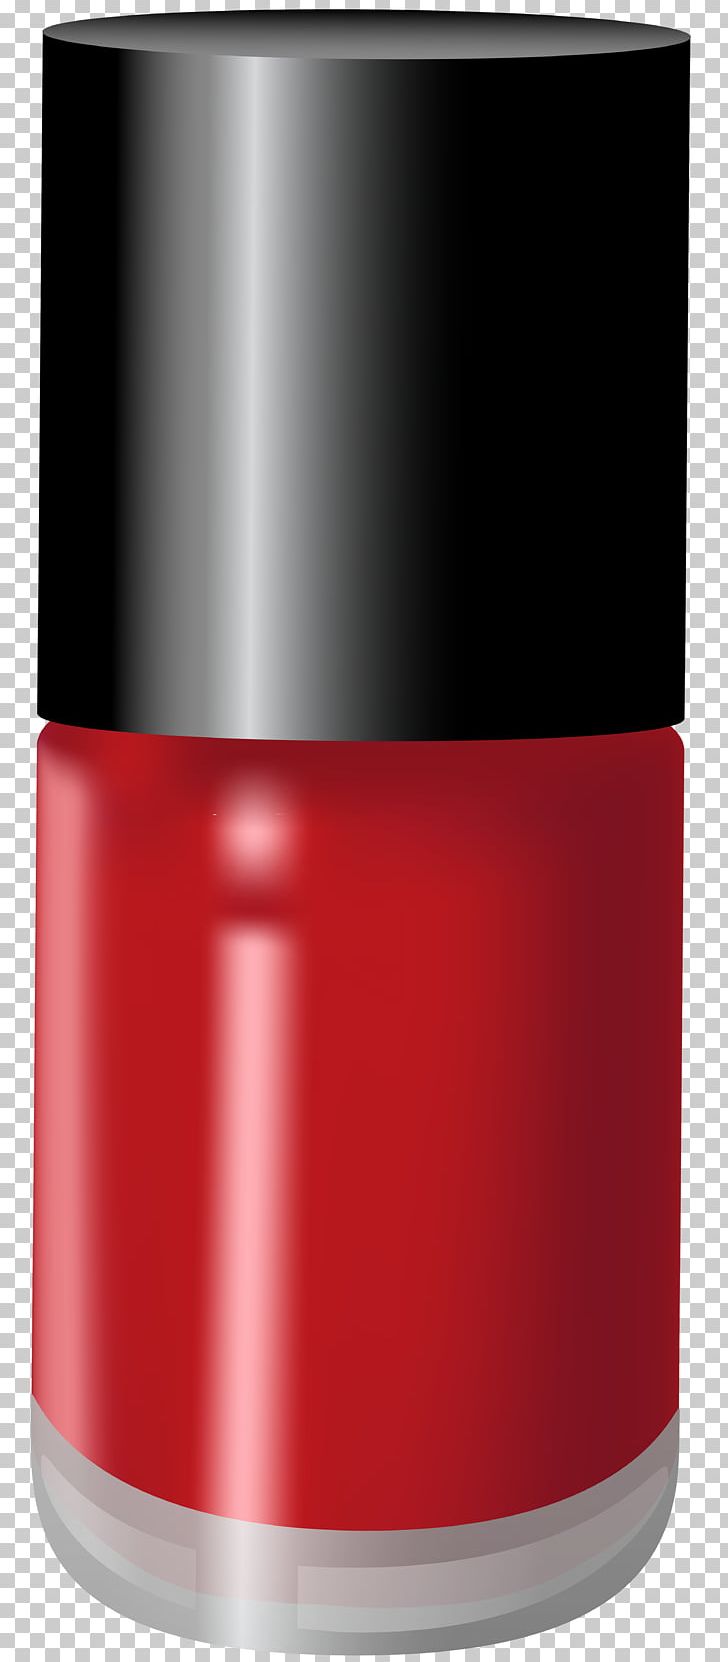 Lipstick Nail Polish Cream PNG, Clipart, Cosmetics, Cream, Cylinder, Lipstick, Nail Free PNG Download